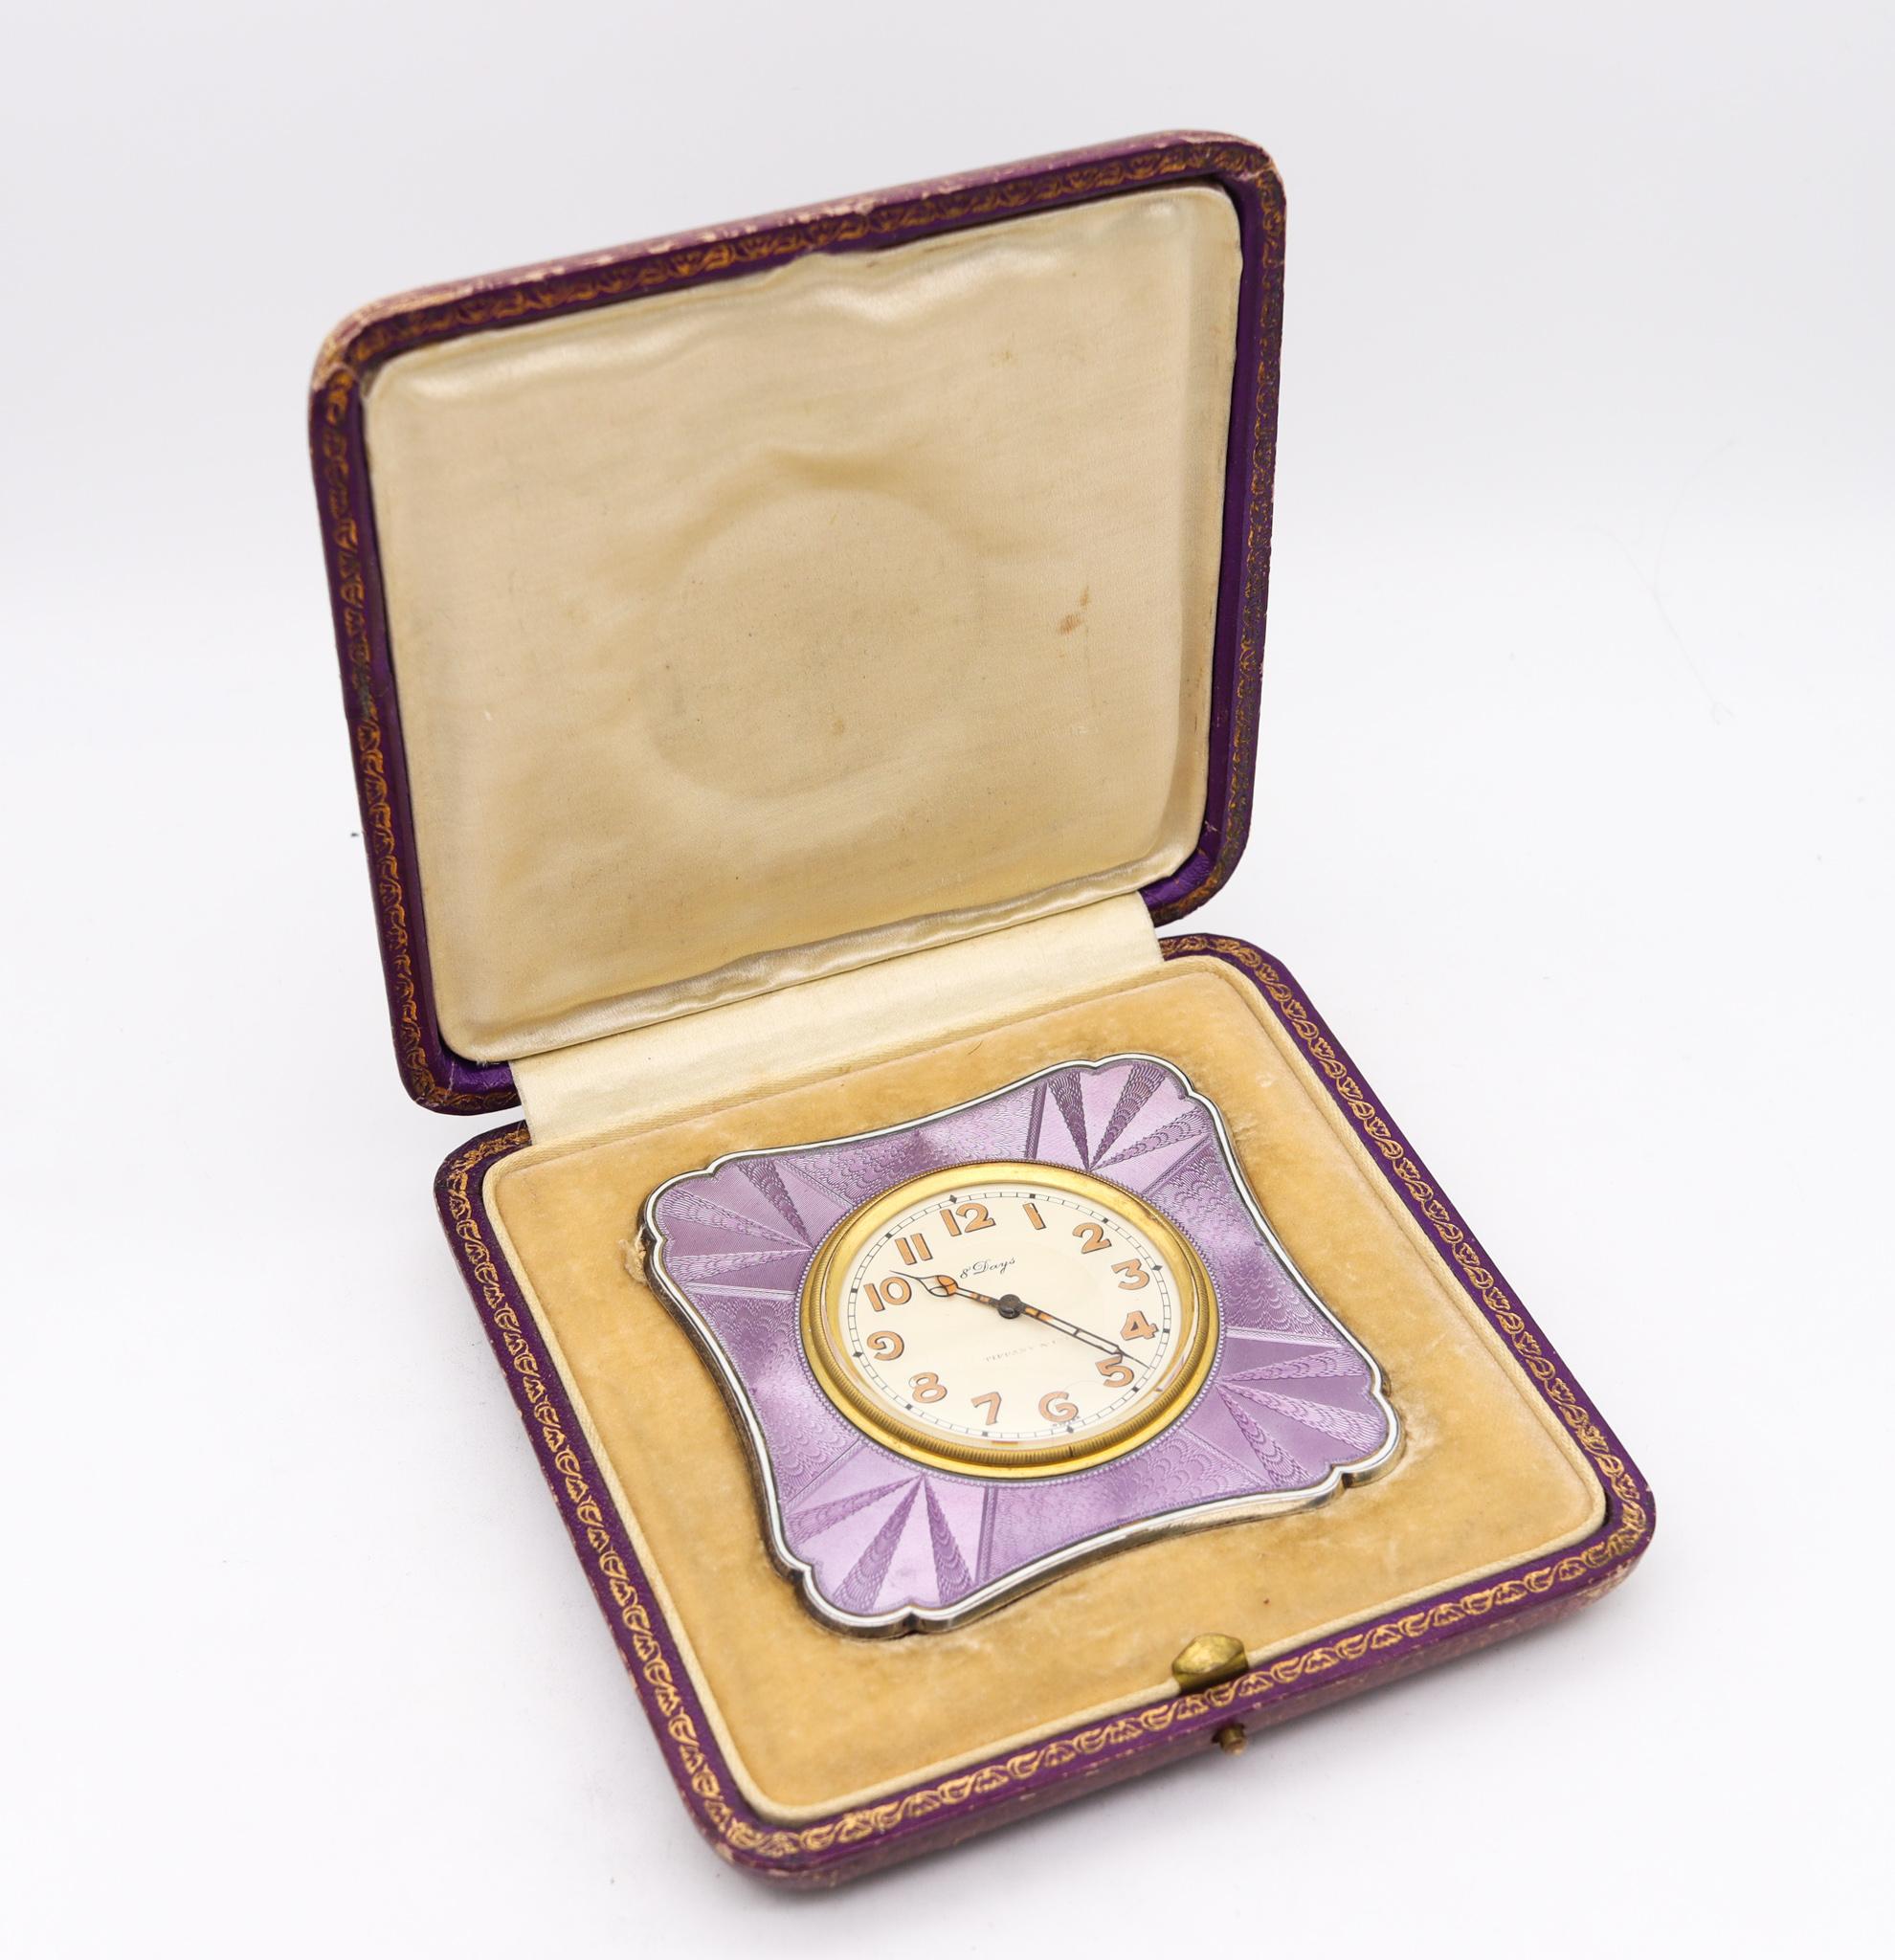 Tiffany & Co. 1920 Art Deco 8 Days Desk Clock Sterling Silver & Enamel with Box  For Sale 5